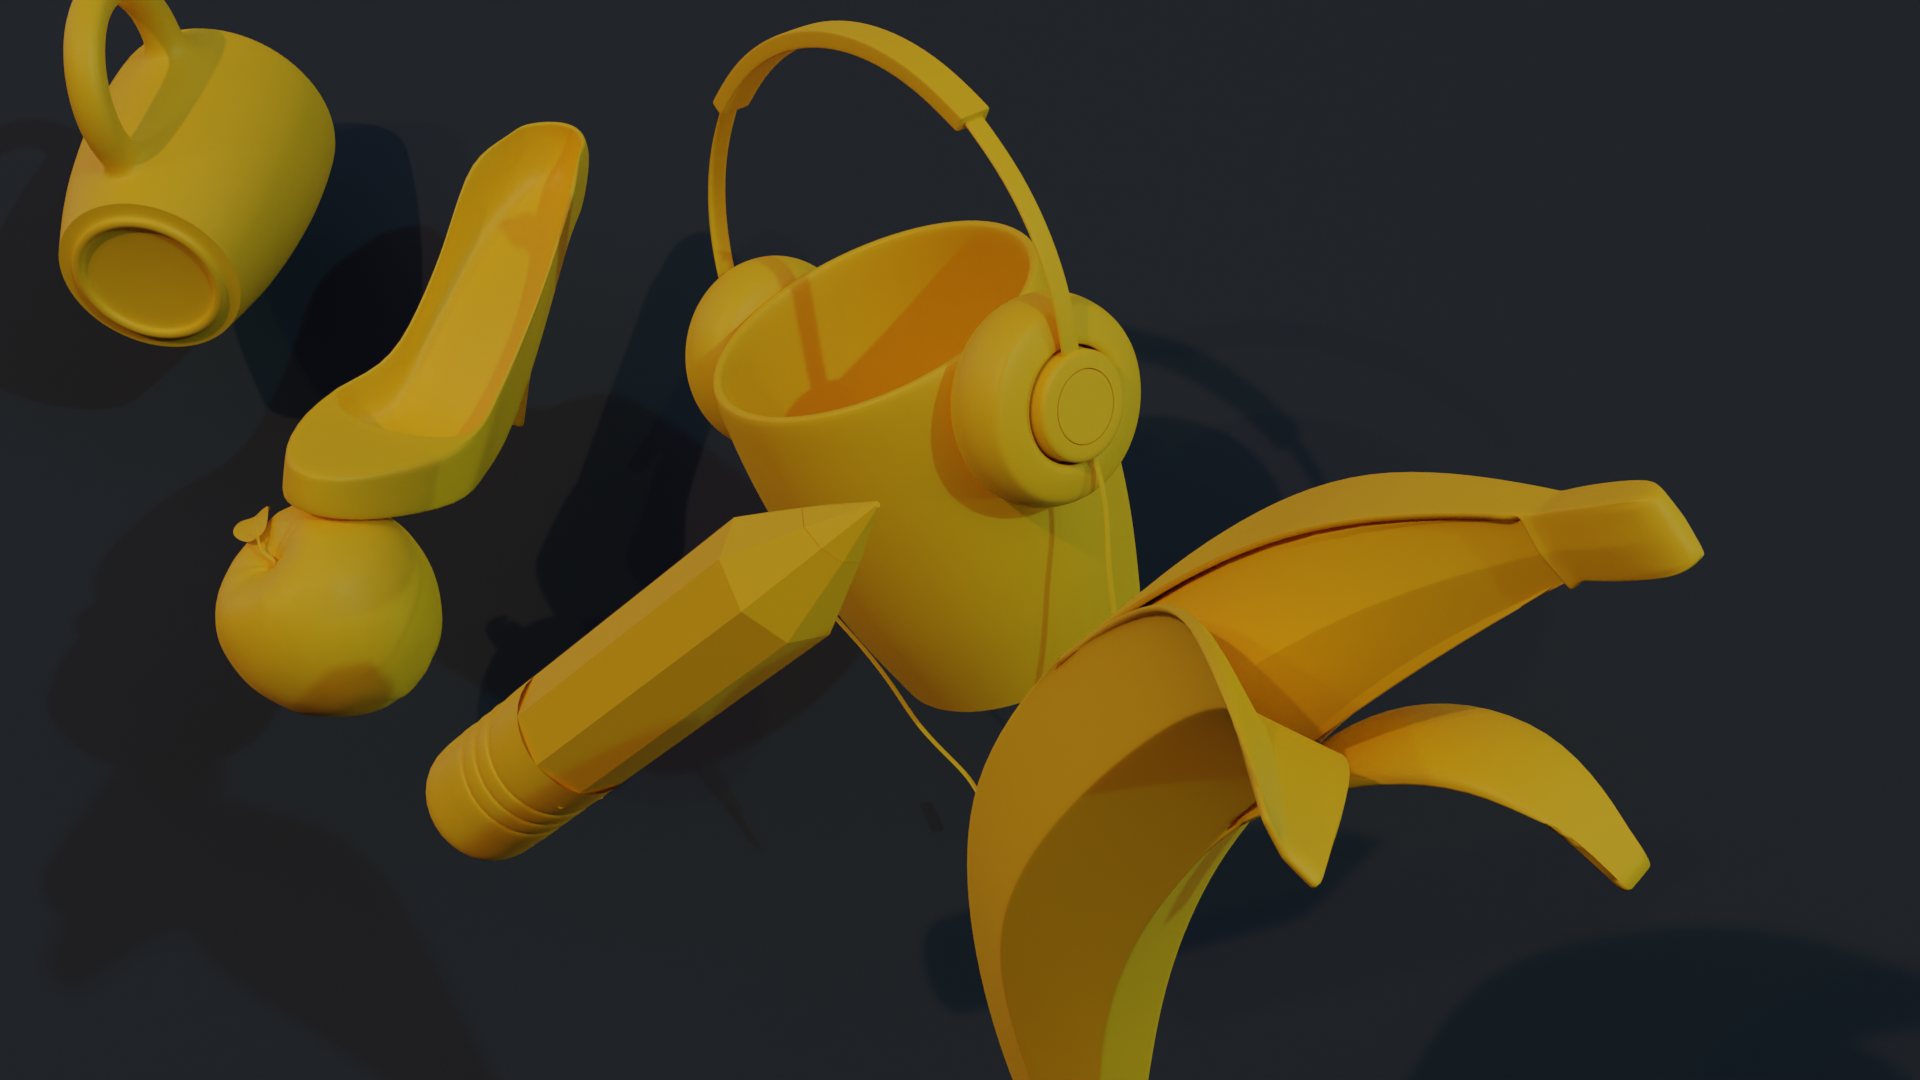 yellow banana, cups, pencil, headphones, shoe,   and apple